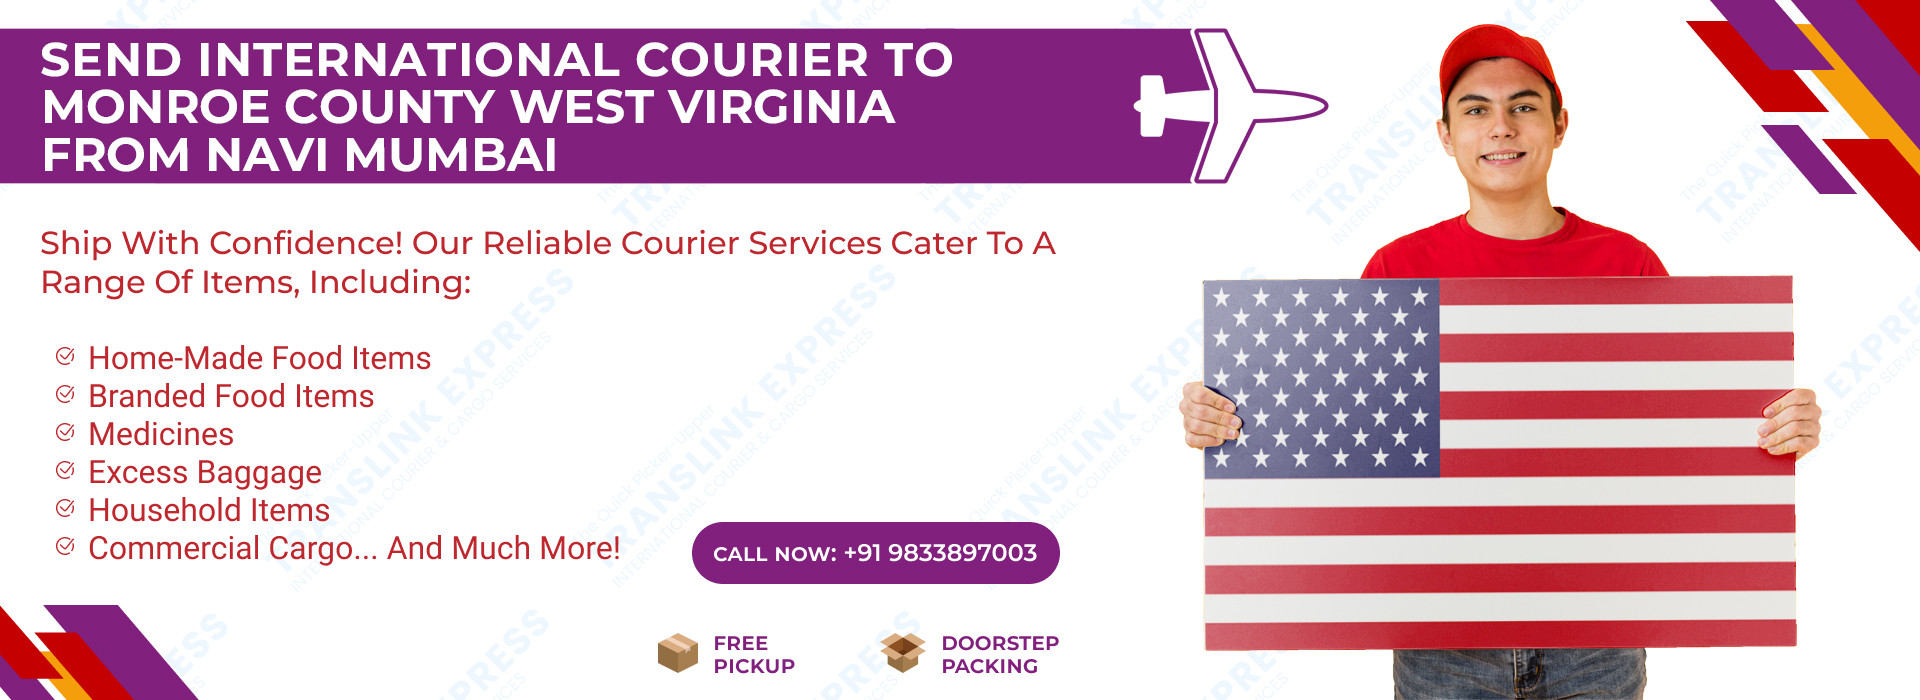 Courier to Monroe County West Virginia From Navi Mumbai